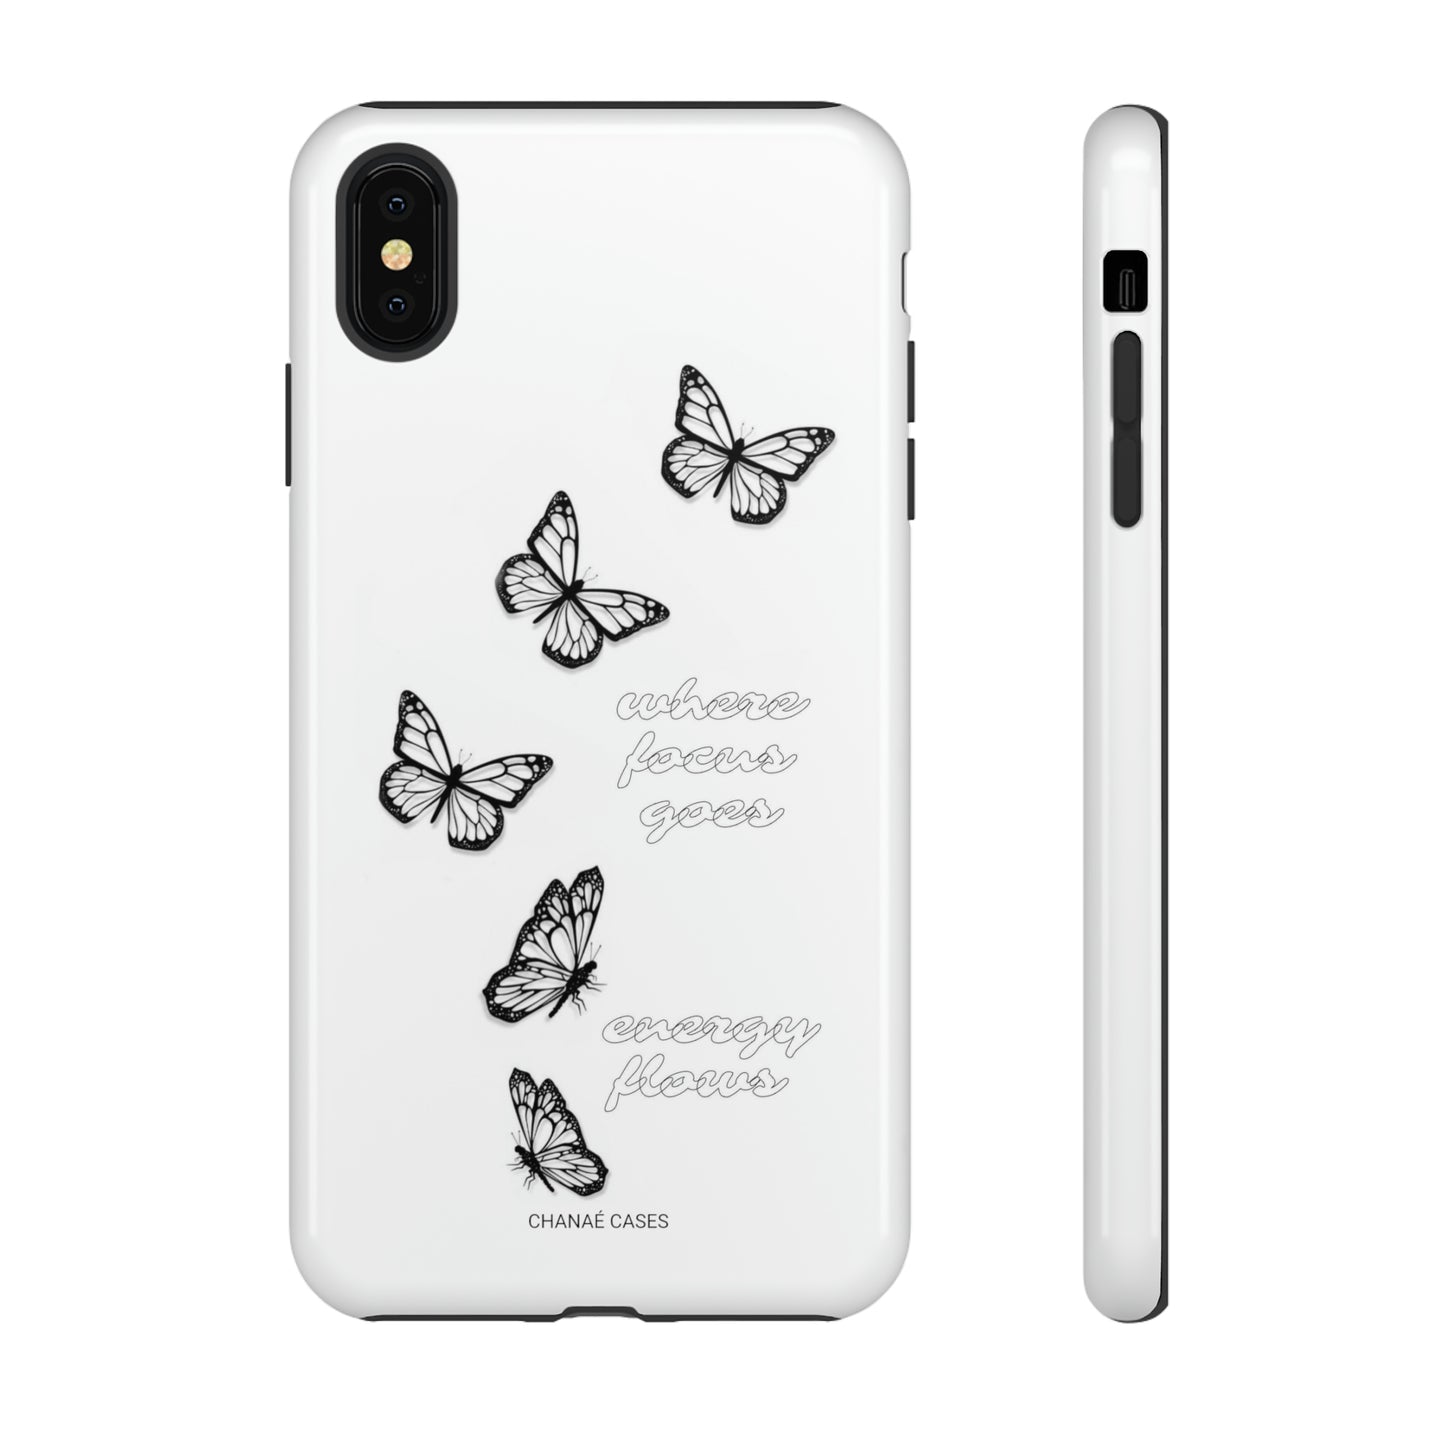 Shelbie iPhone "Tough" Case (White)